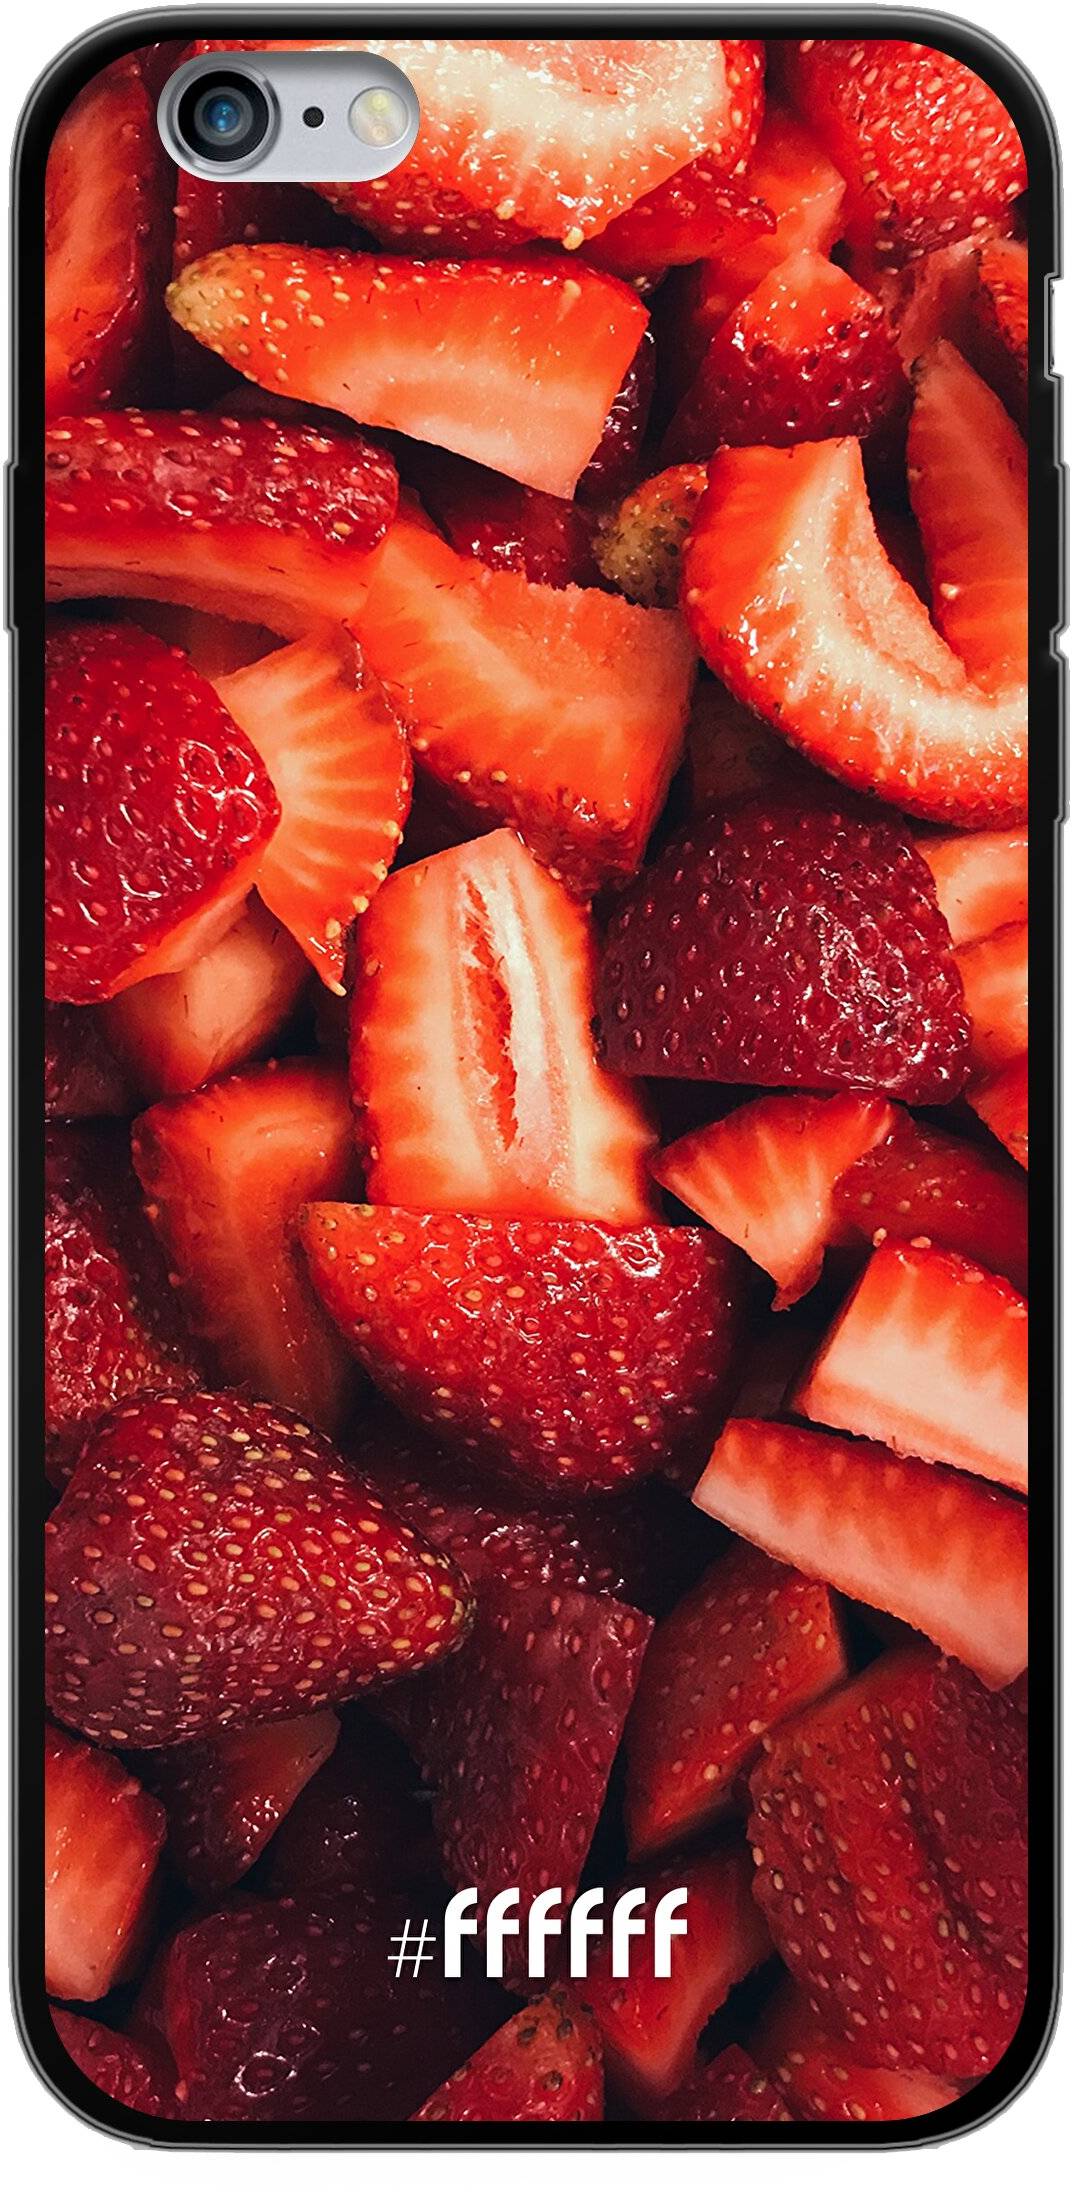 Strawberry Fields iPhone 6